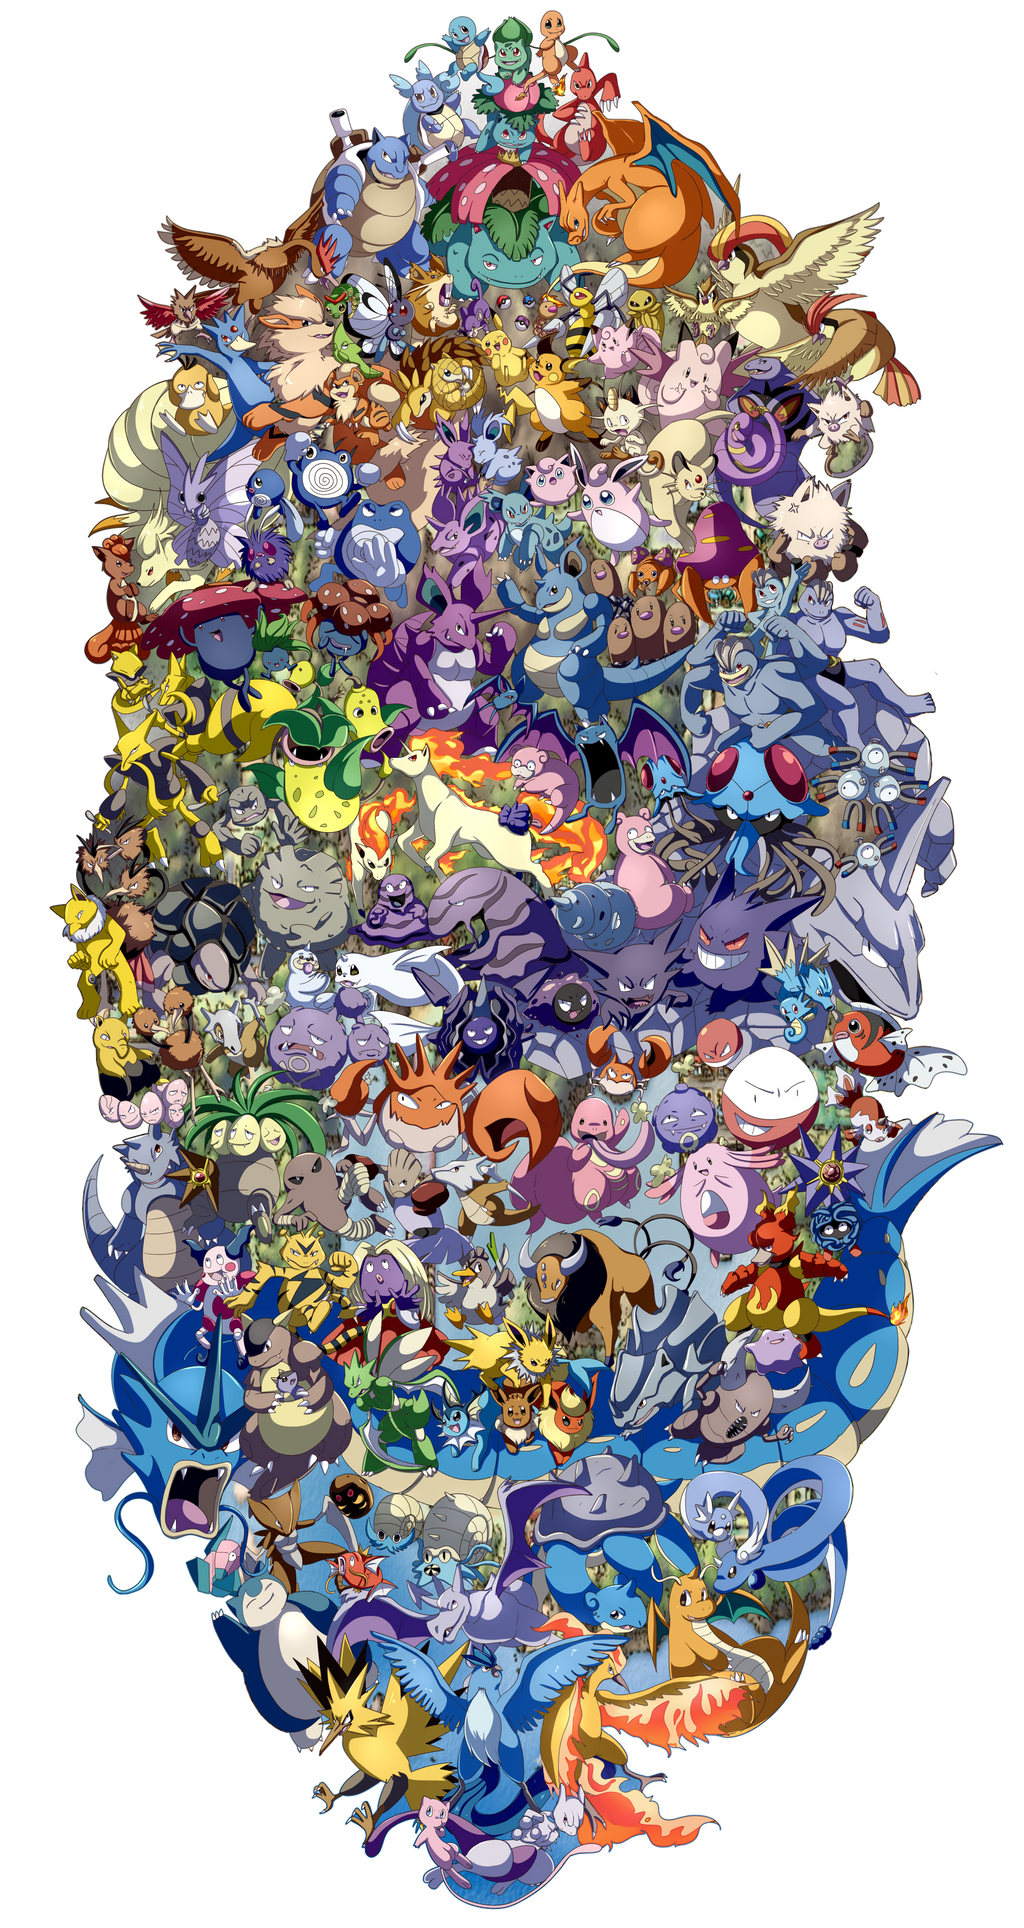 Project Shiny Pokemon: Johto's New Pokedex by Twarda8 on DeviantArt